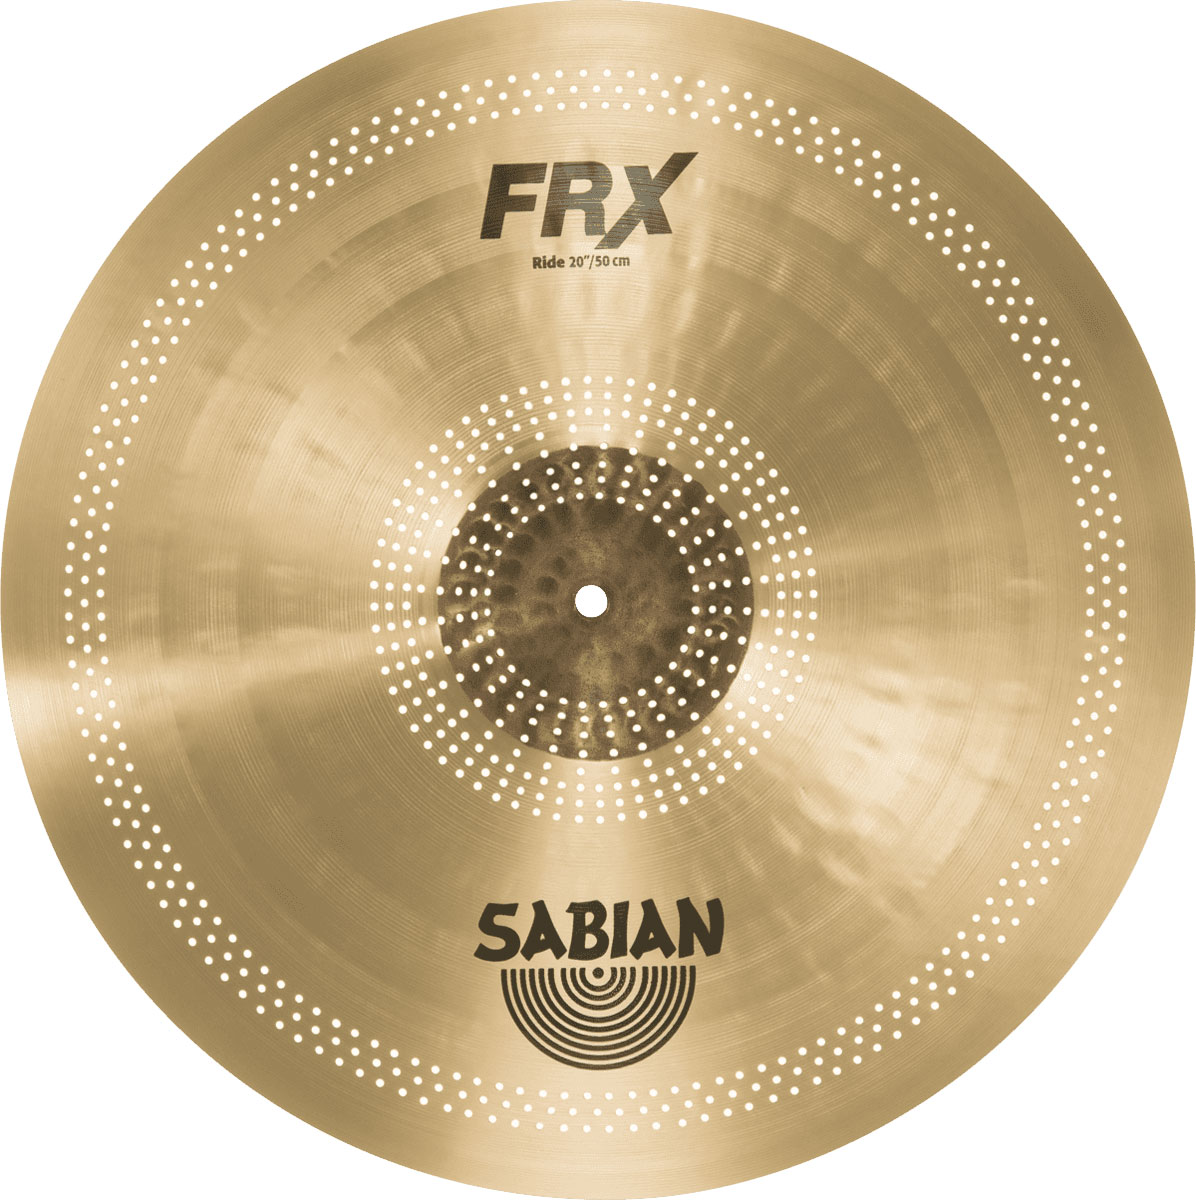 SABIAN FRX2012 - FRX RIDE 20